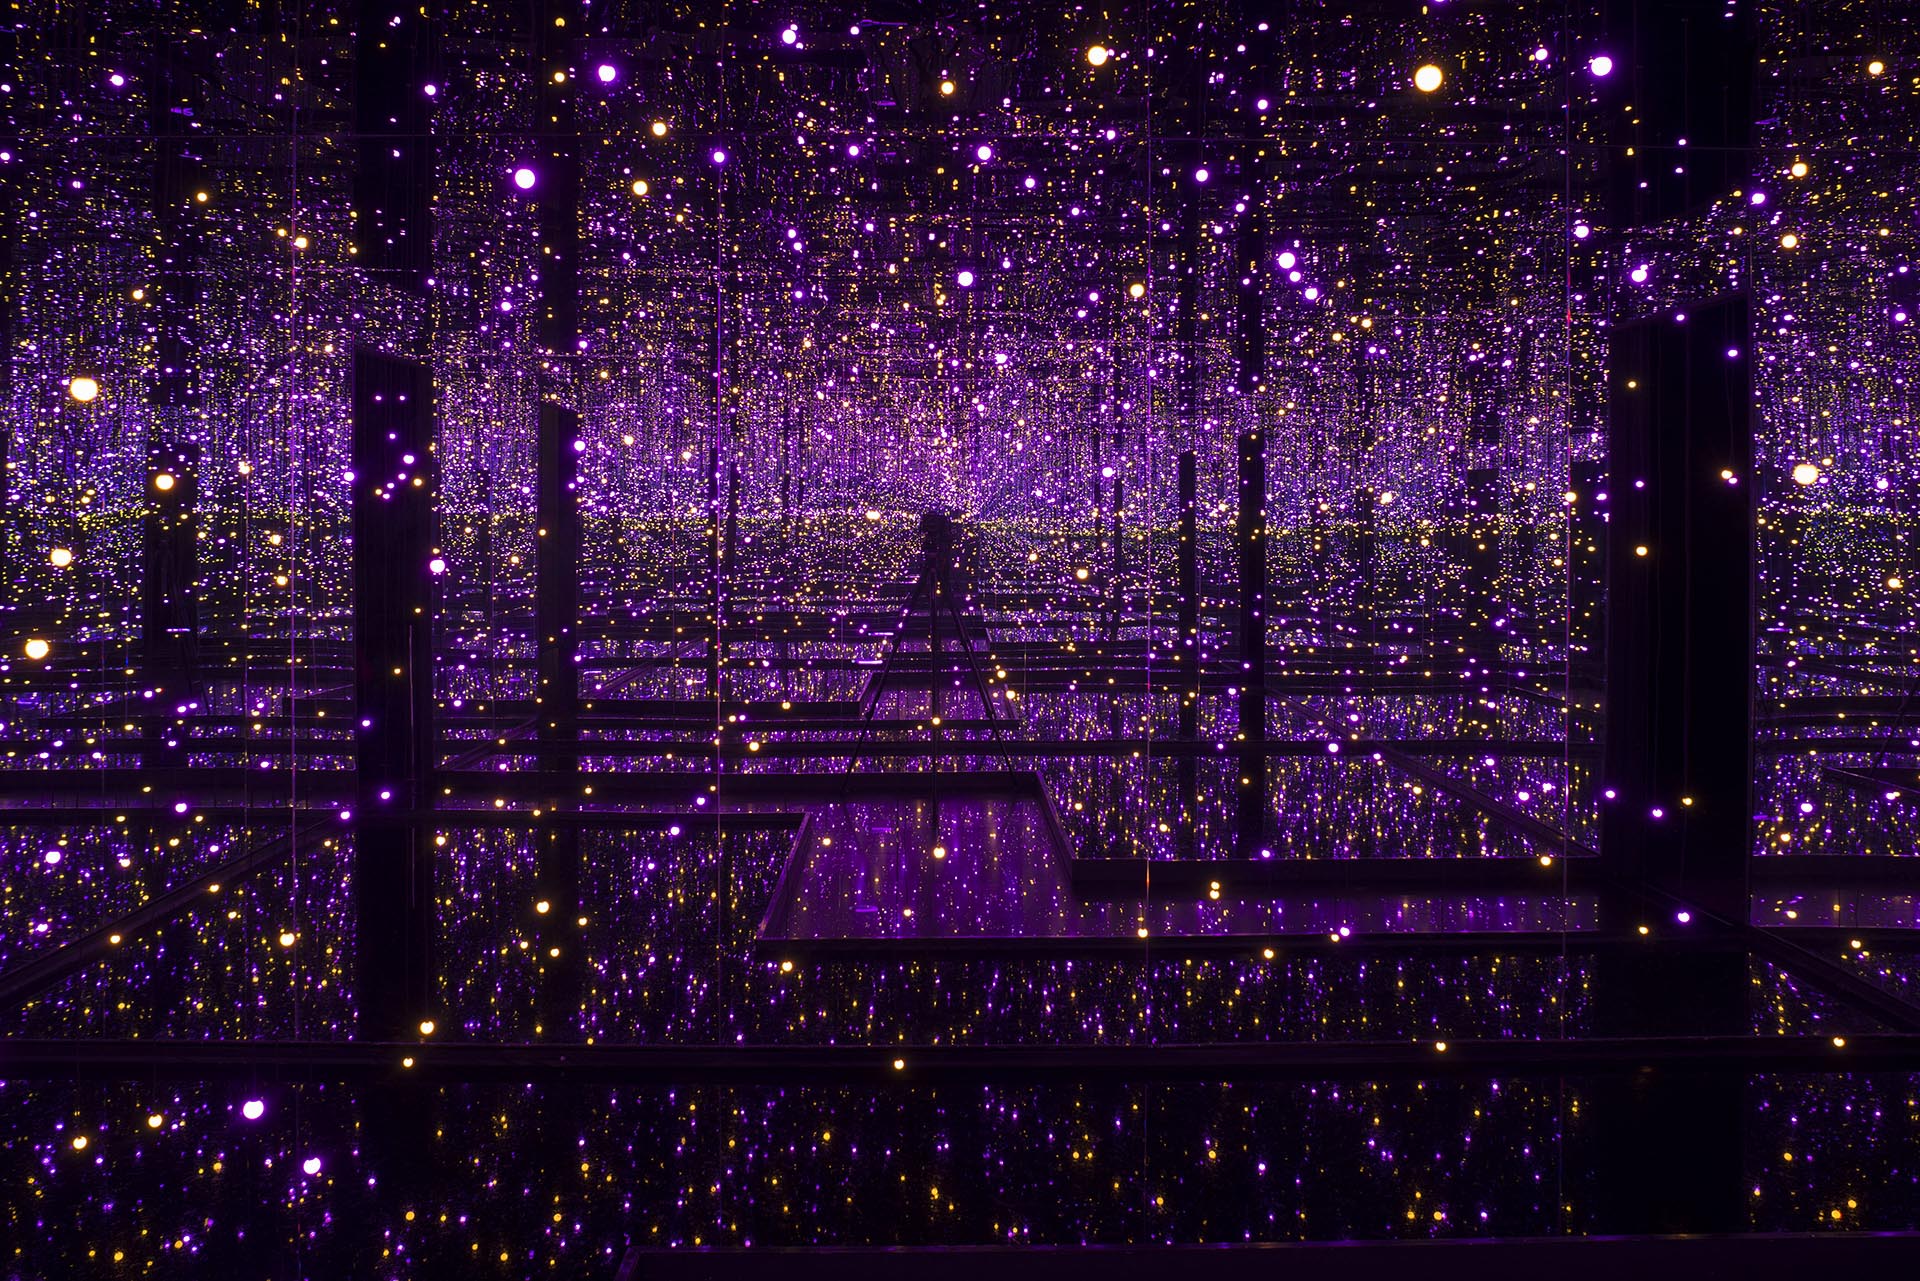 Kusama’s Infinity Mirror Rooms in Tate Modern